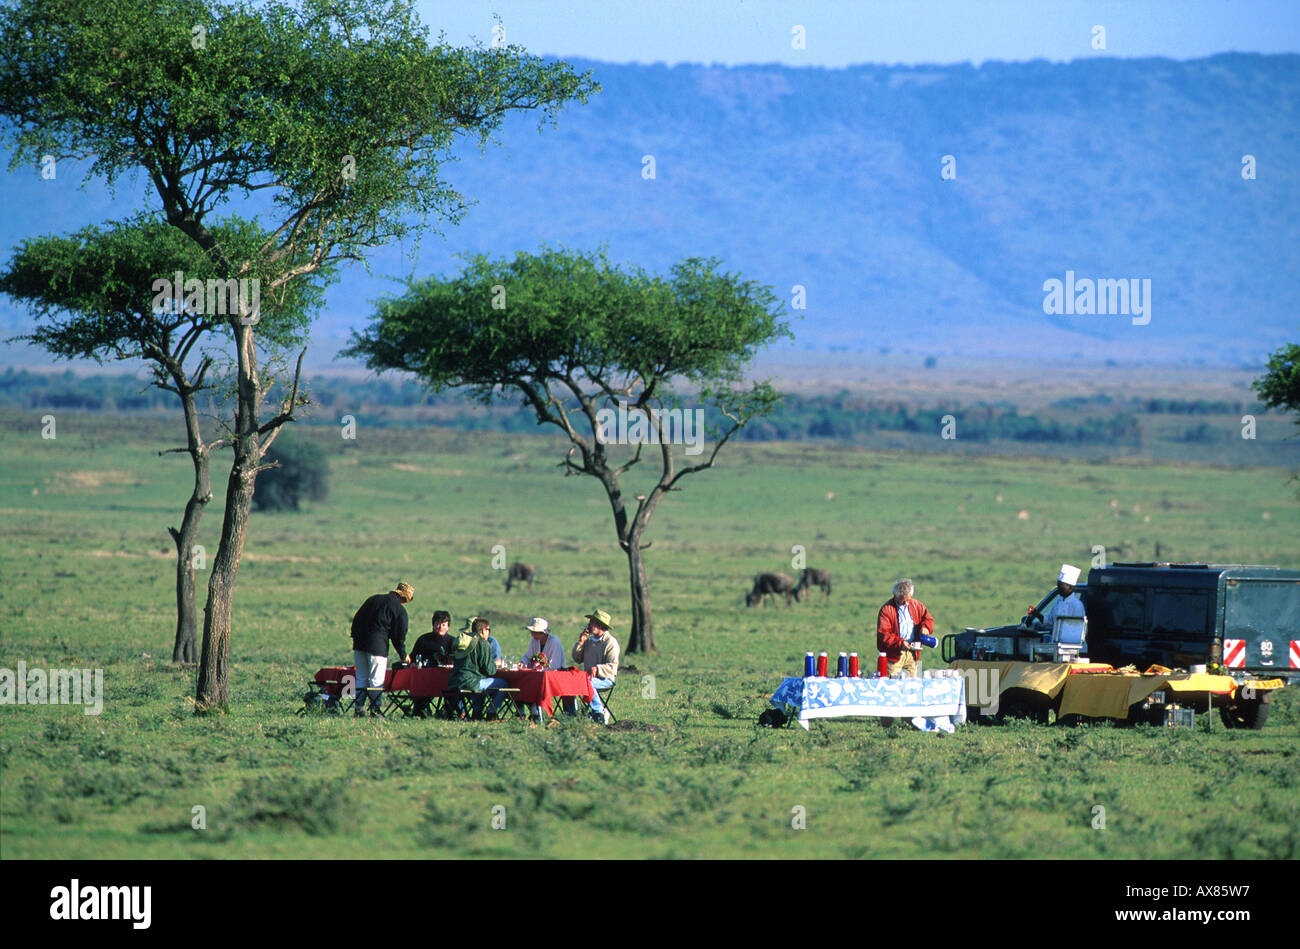 Dans Ballonflug Fruehstueck Steppe nach Transworld, safaris, les gnous dans Distanz Masai Mara Natl. Réserver, Kenia Banque D'Images